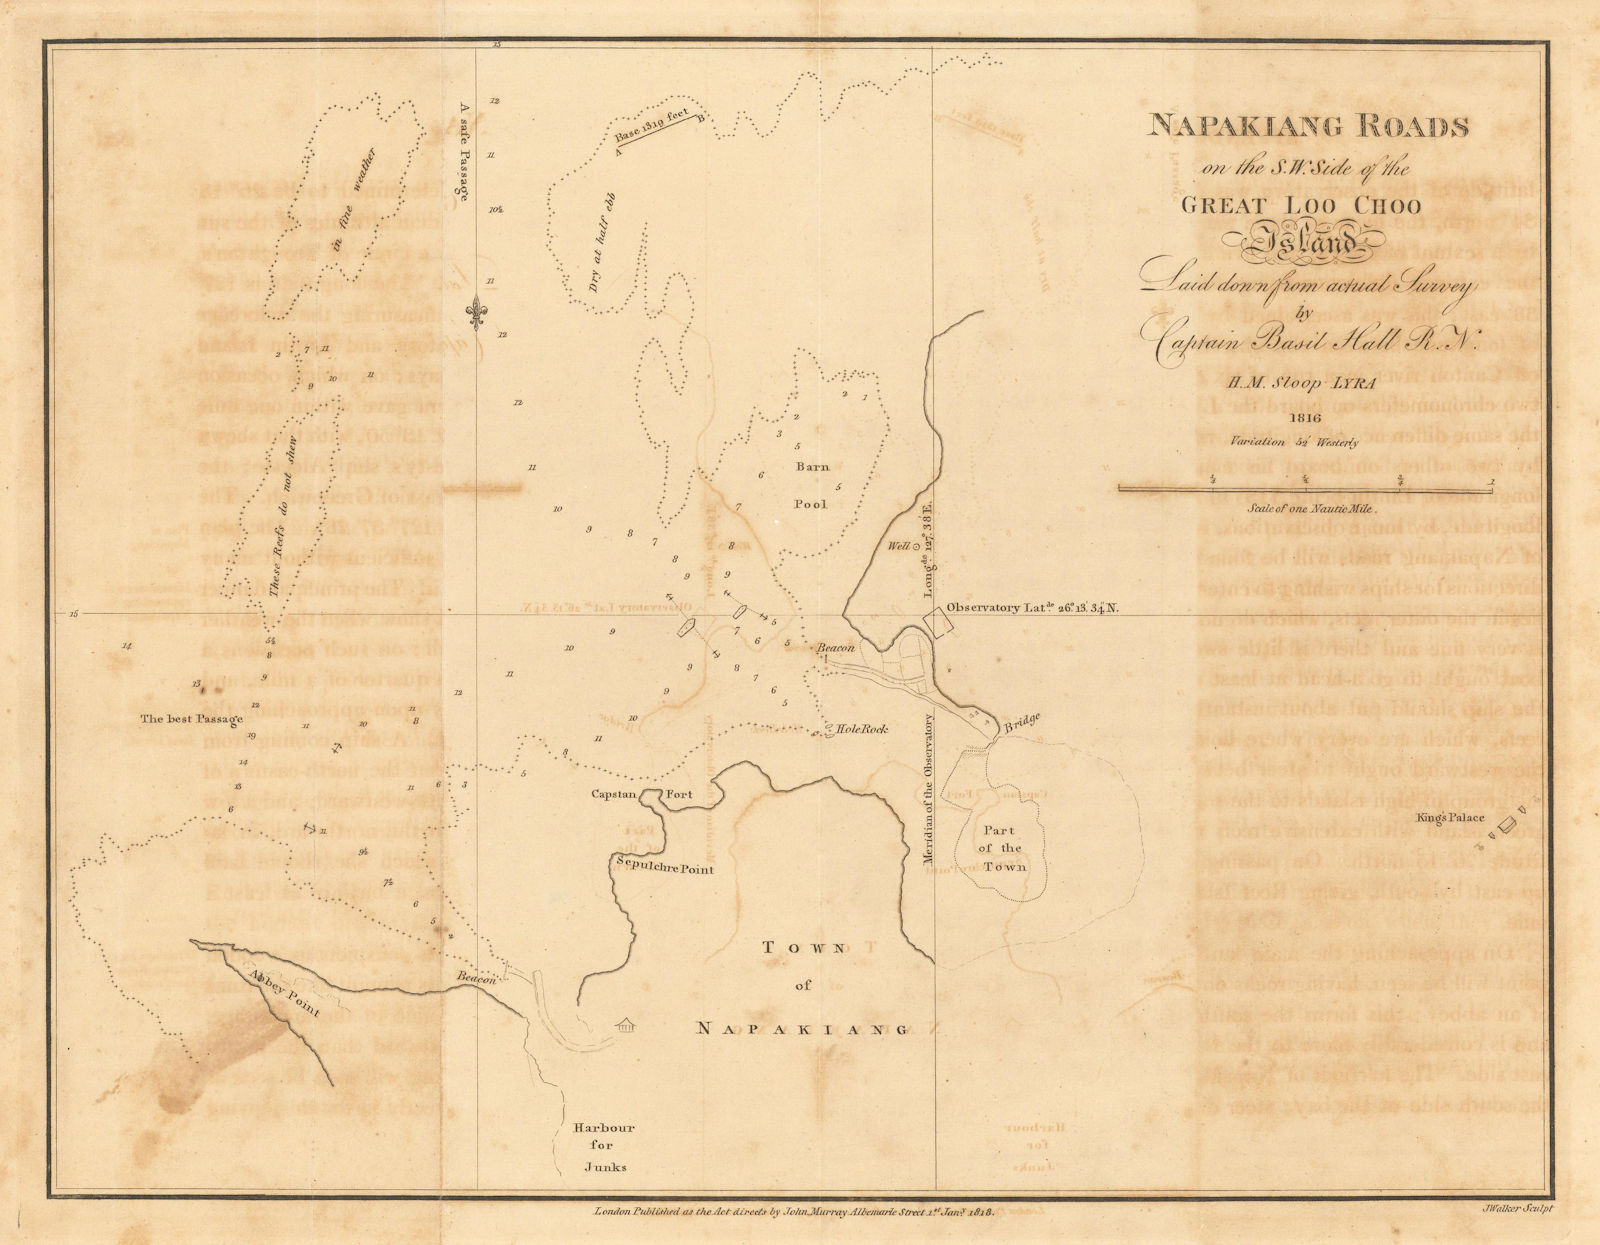 Napakiang Roads on… the Great Loo Choo Island. Naha, Okinawa. HALL 1818 map